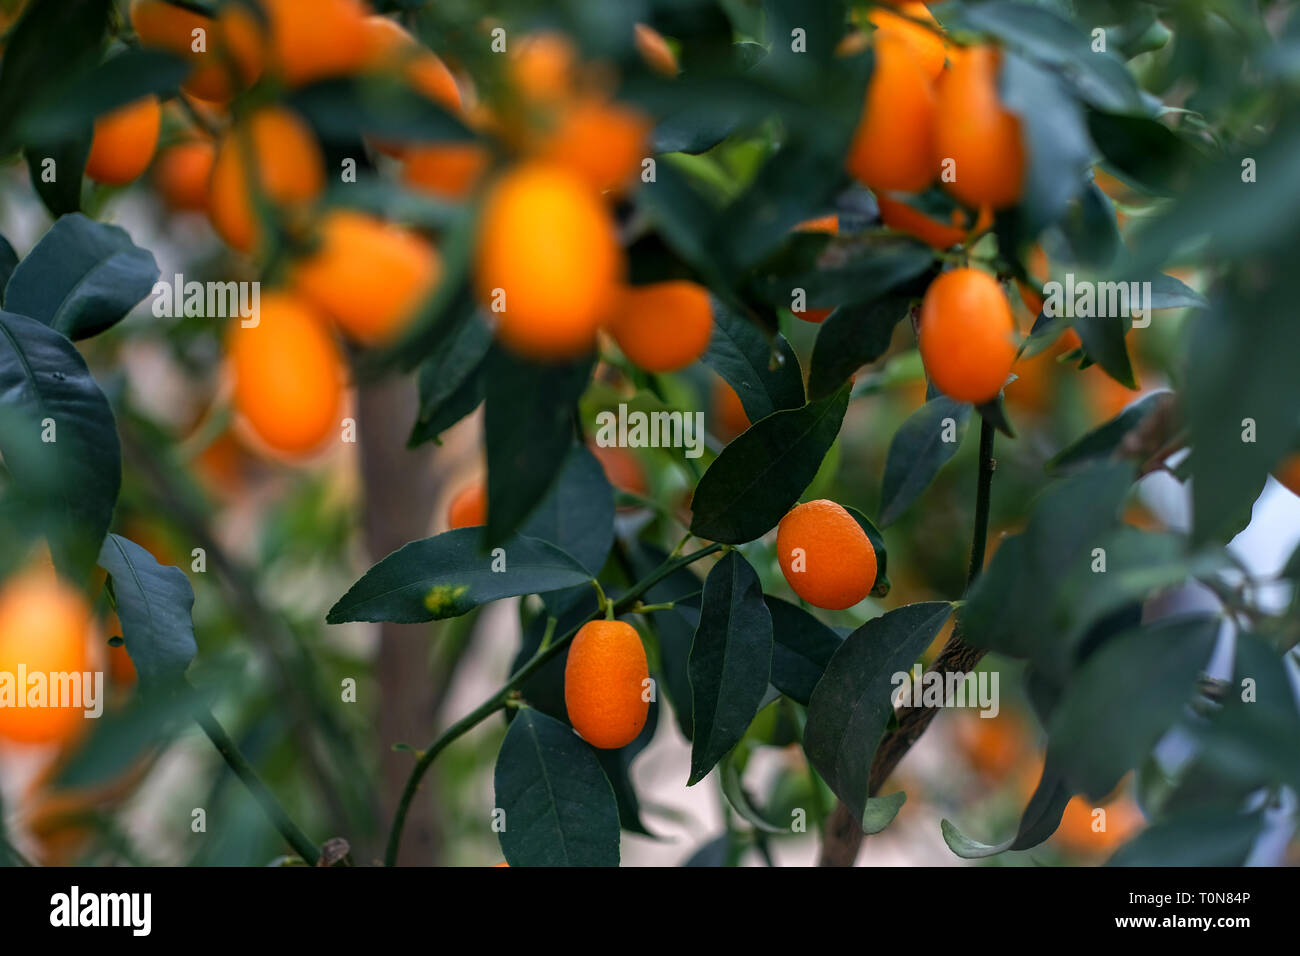 kumquat fruit (Citrus japonica) on a tree Stock Photo